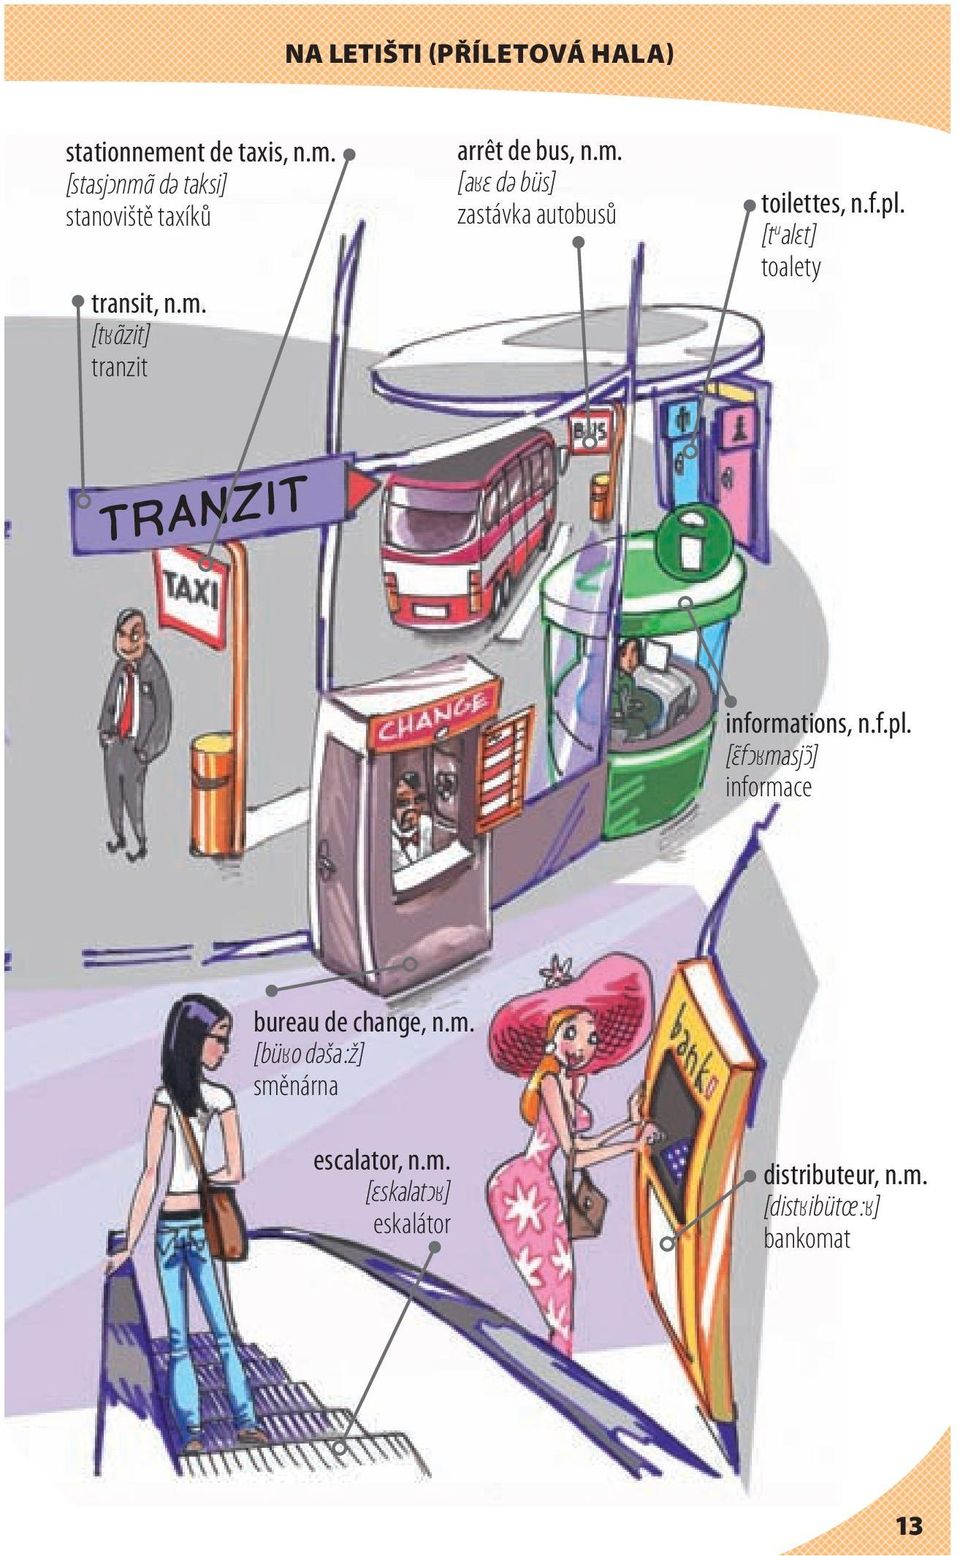 [t u alεt] toalety TRANZIT informations, n.f.pl. [ f masj ] informace bureau de change, n.m. [bü o dәša :ž] směnárna escalator, n.